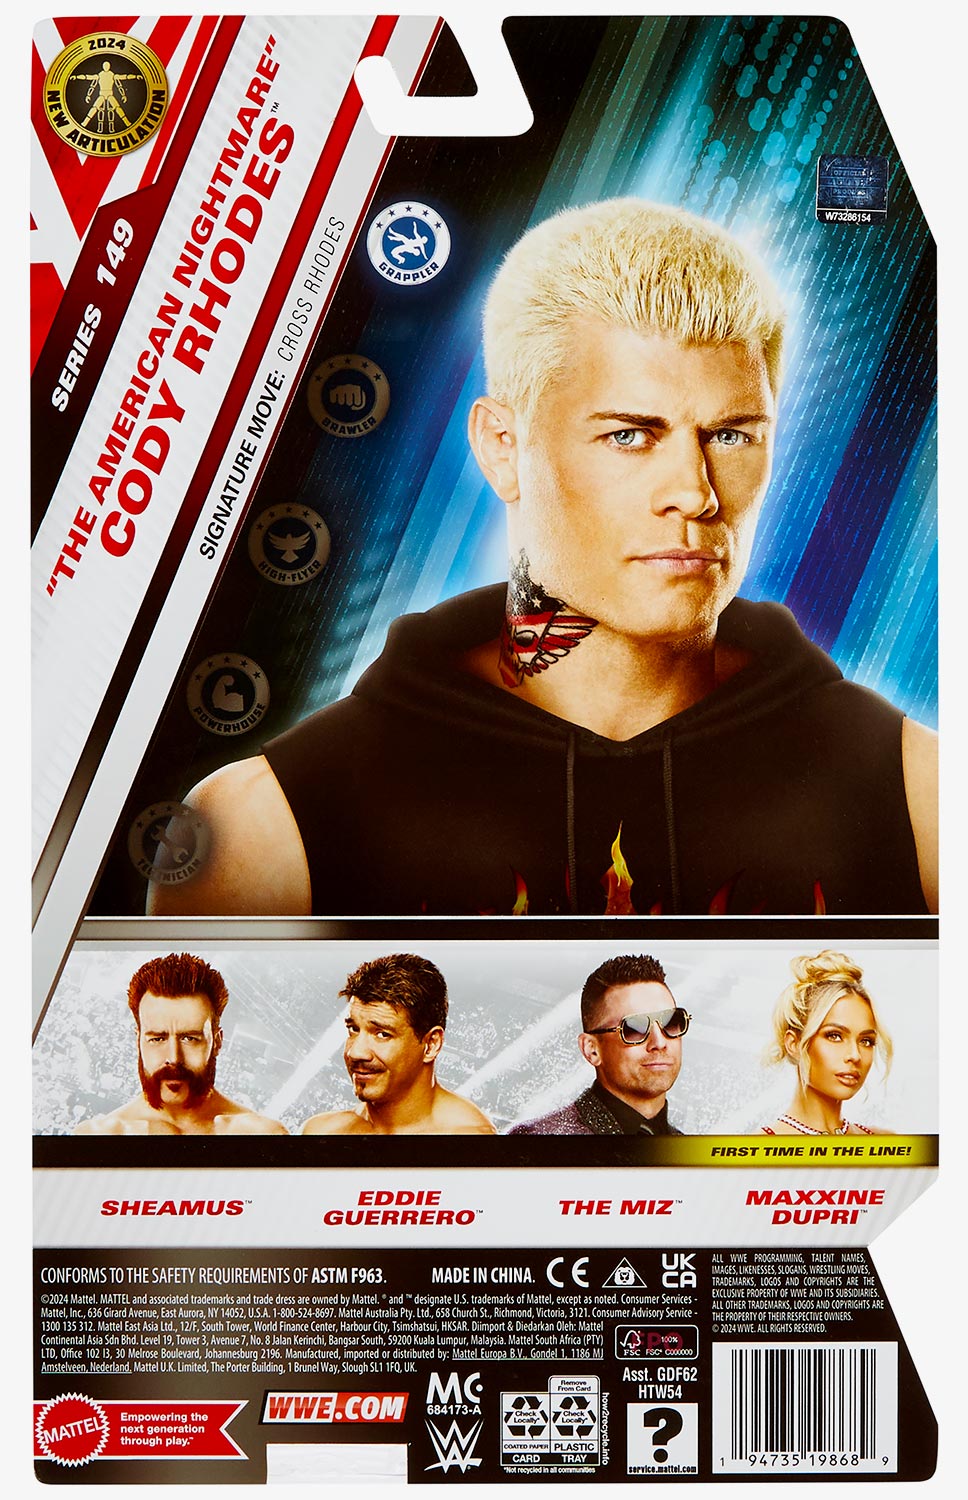 "The American Nightmare" Cody Rhodes WWE Main Event Series #149